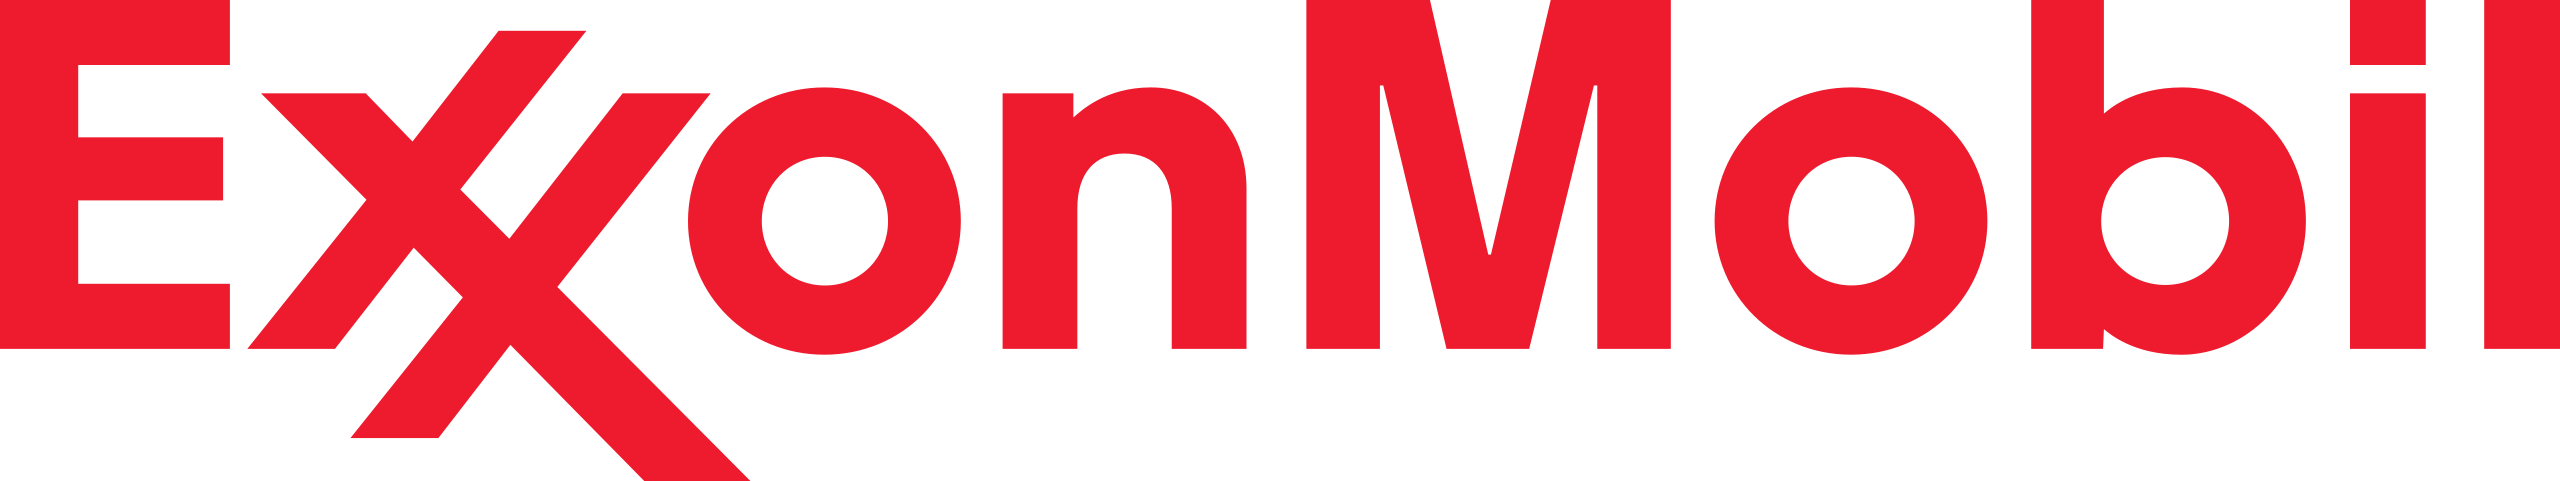 Exxonmobil Indonesia Logo